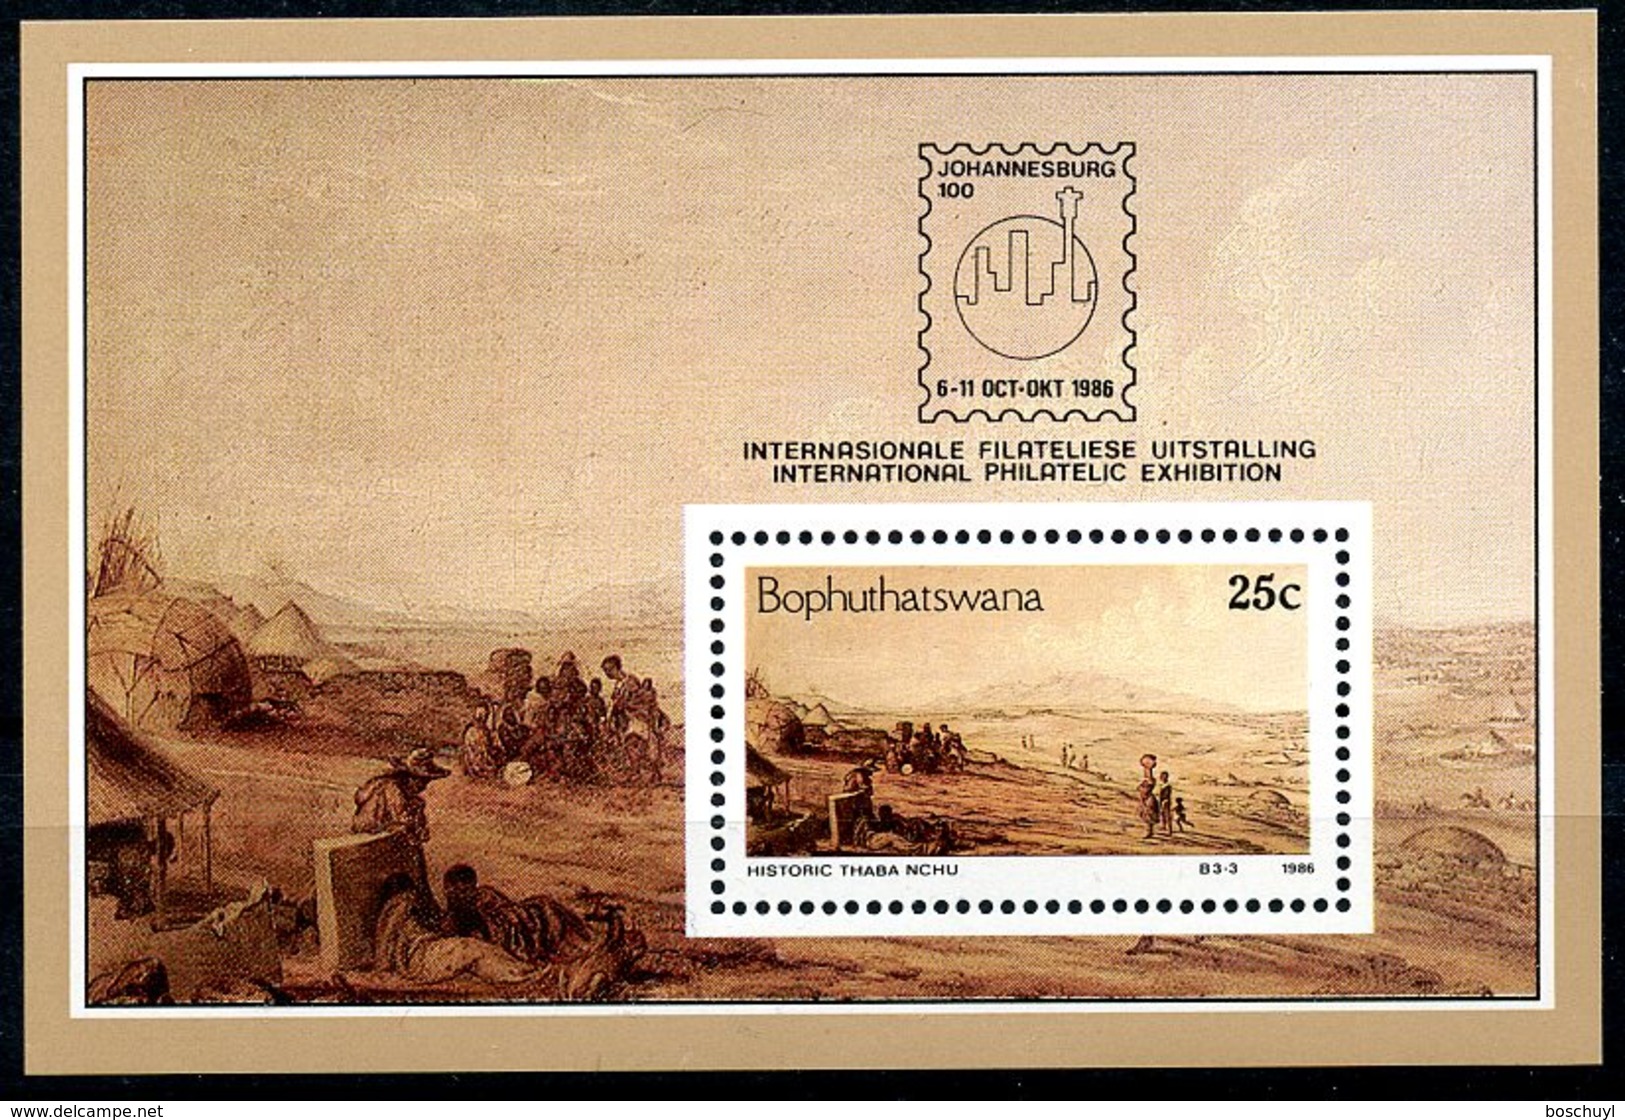 Bophuthatswana, 1986, Johannesburg Stamp Exhibition, Painting, MNH, Michel Block 1 - Bophuthatswana